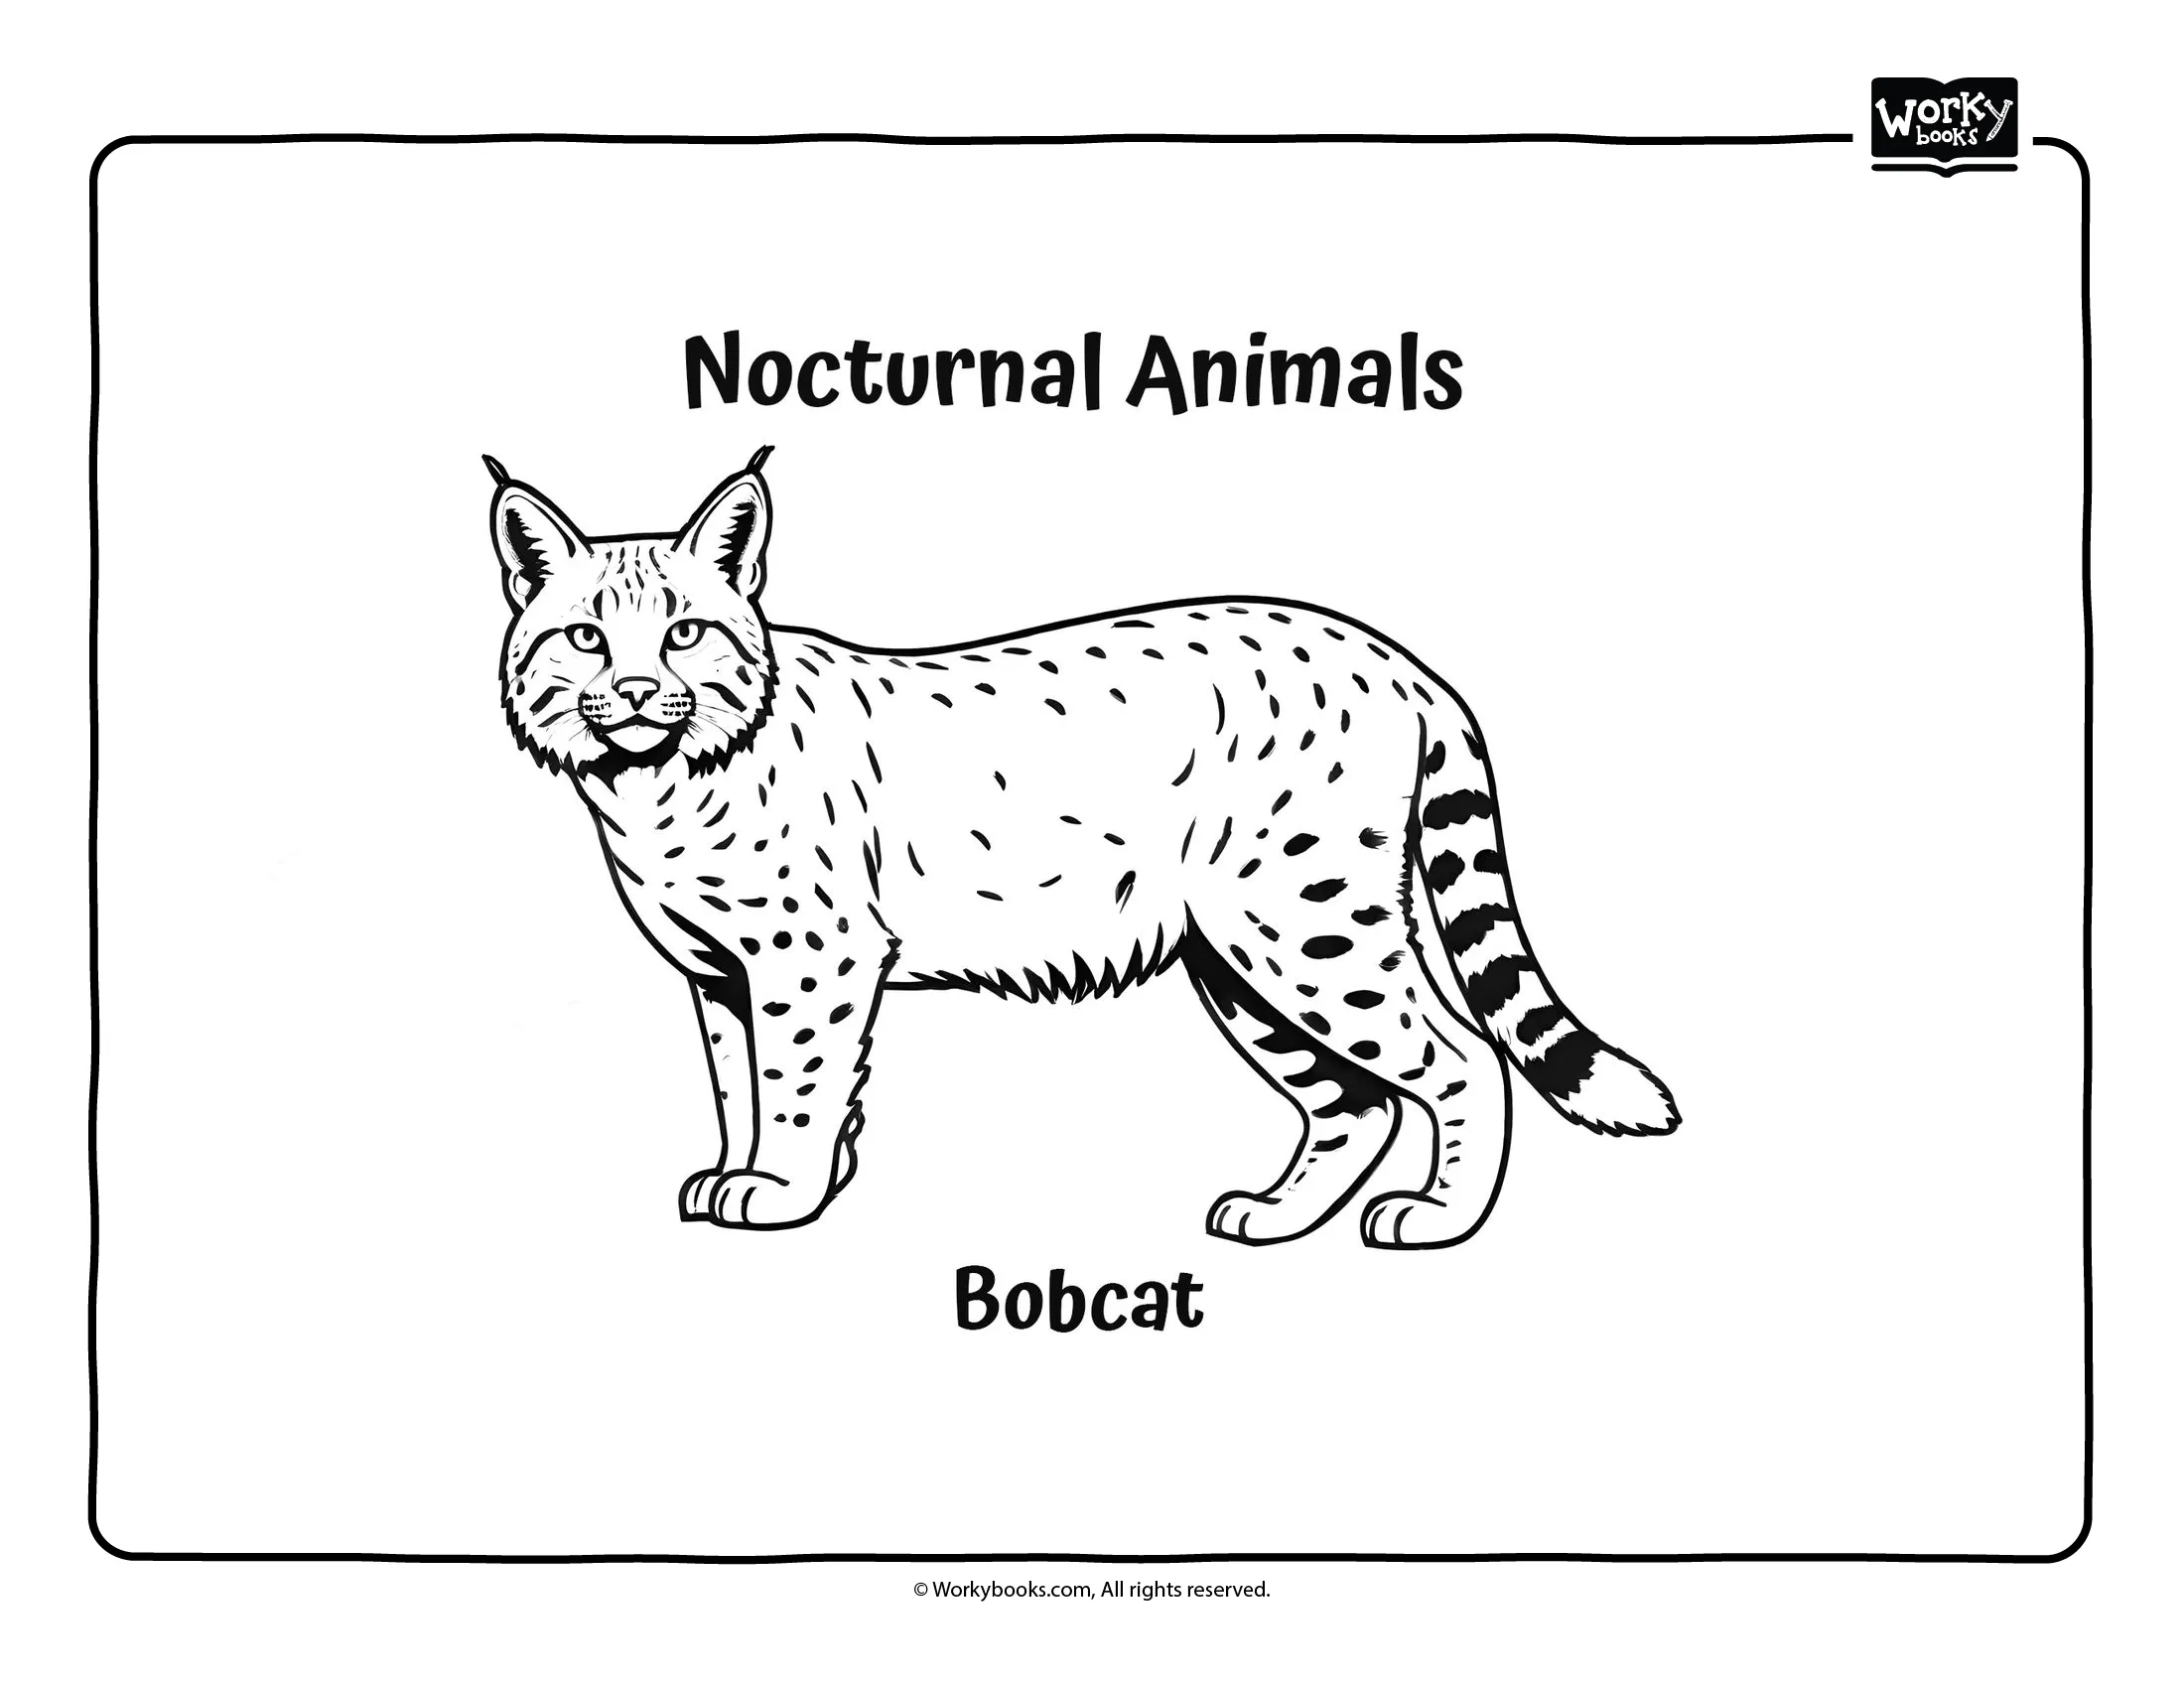 Bobcat coloring page